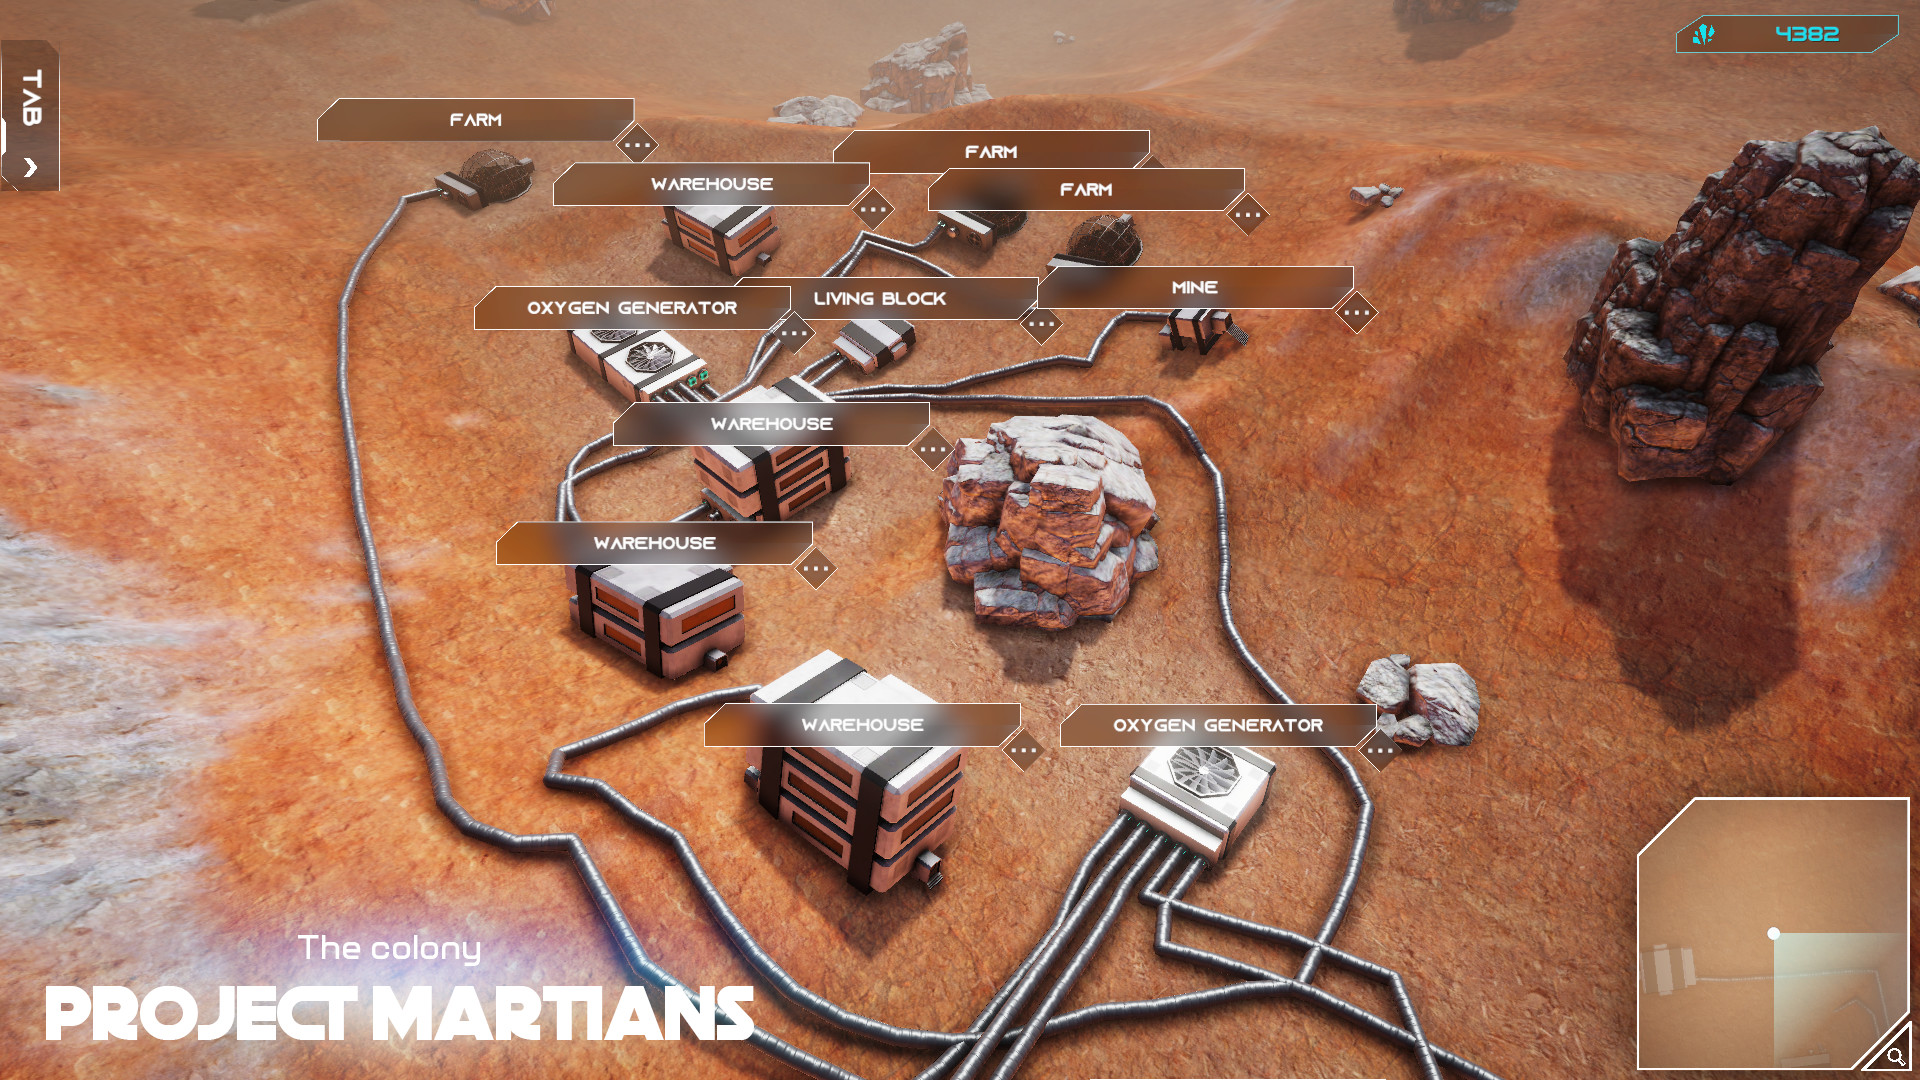 Project Martians Steam CD Key, $4.42